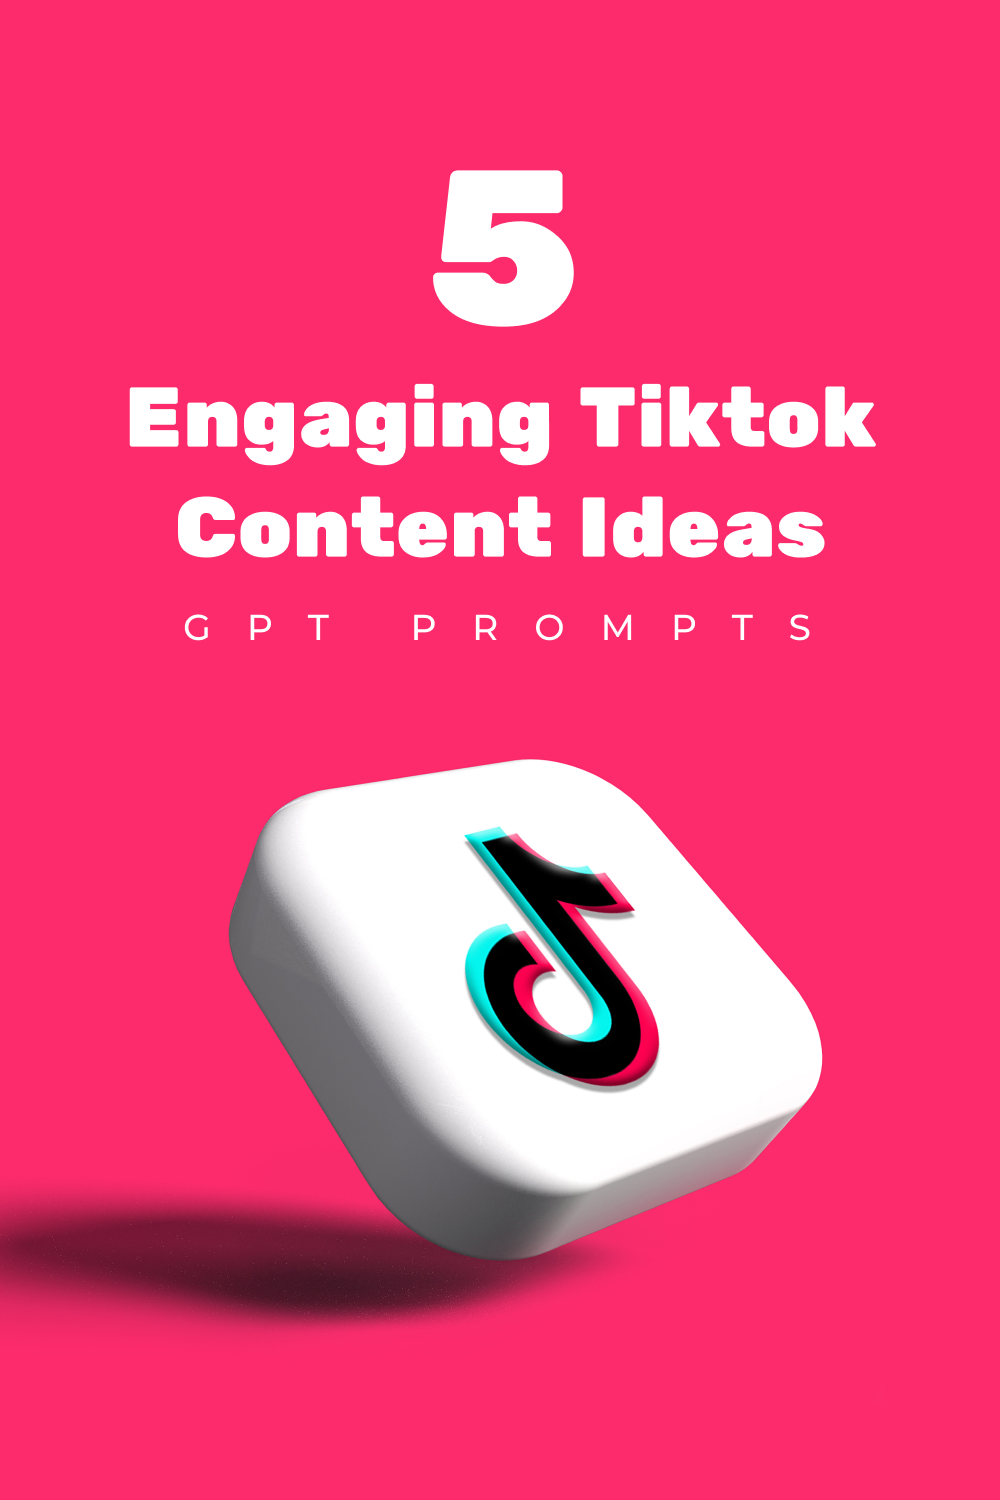 5 engaging tiktok content ideas 1 968